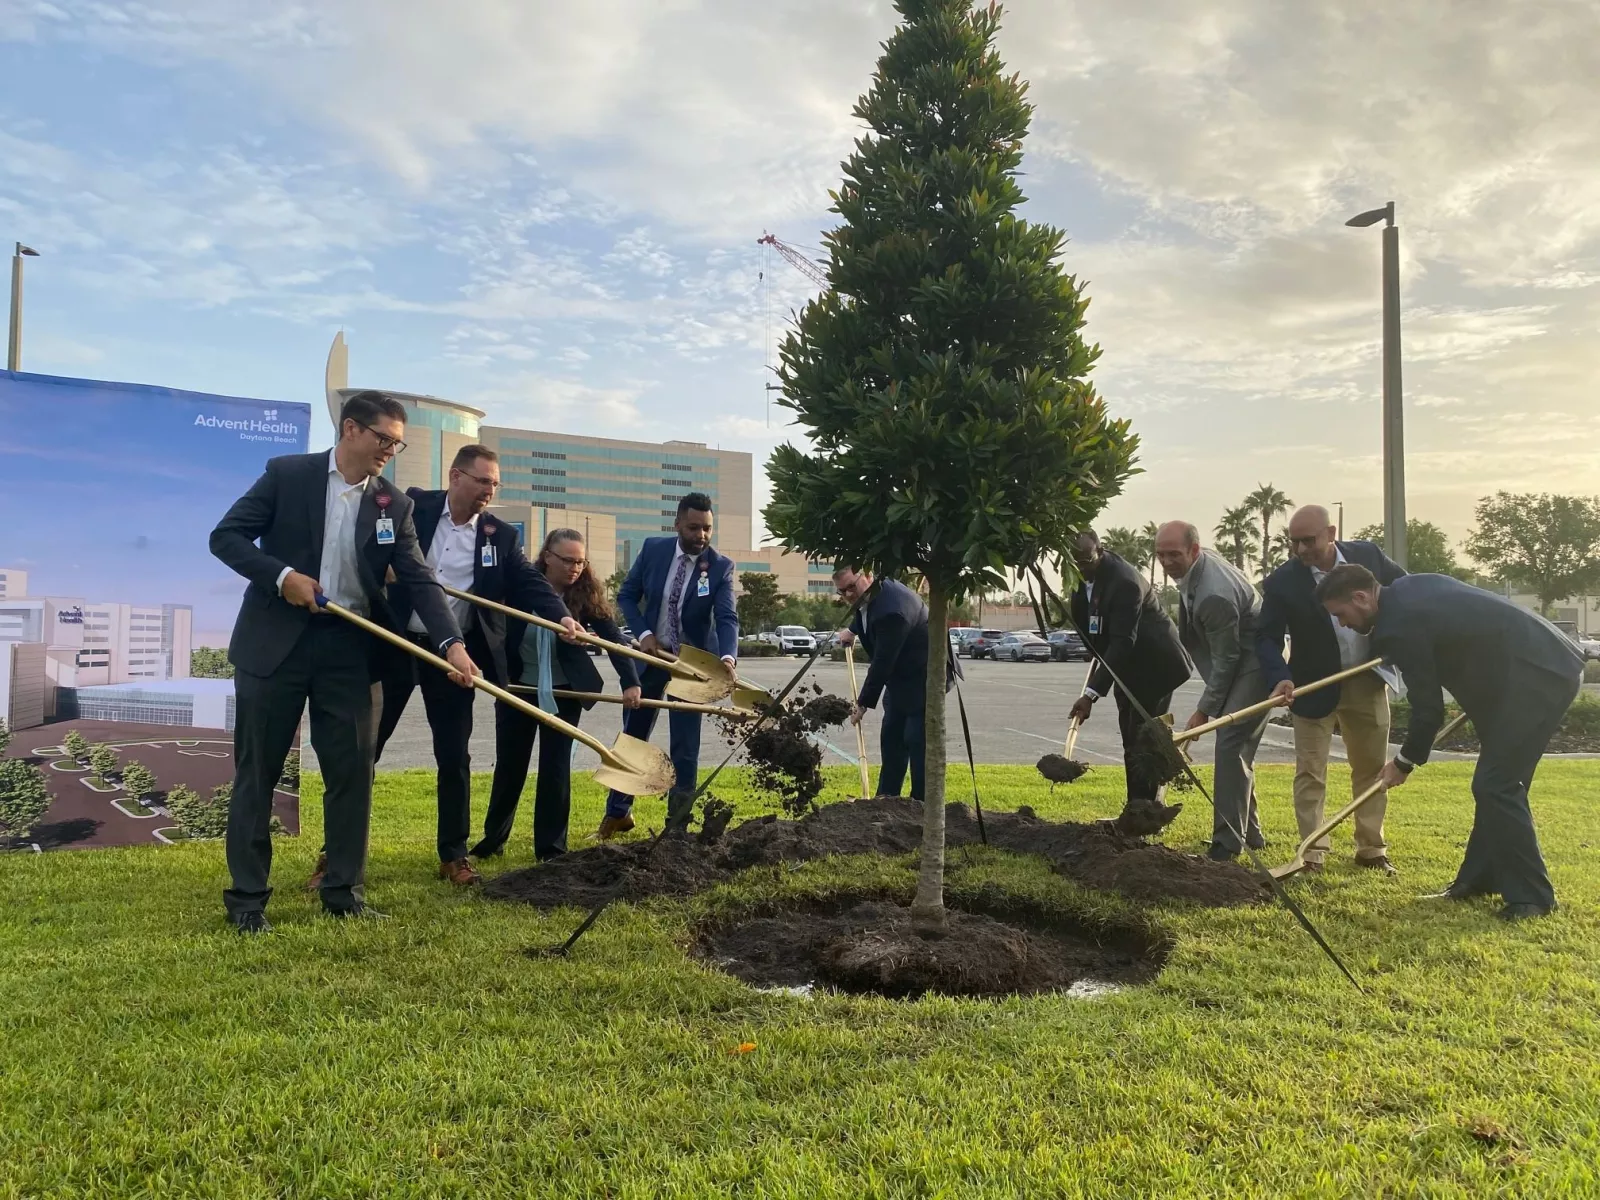 AdventHealth Daytona Beach kicks off construction project with a tree planting.